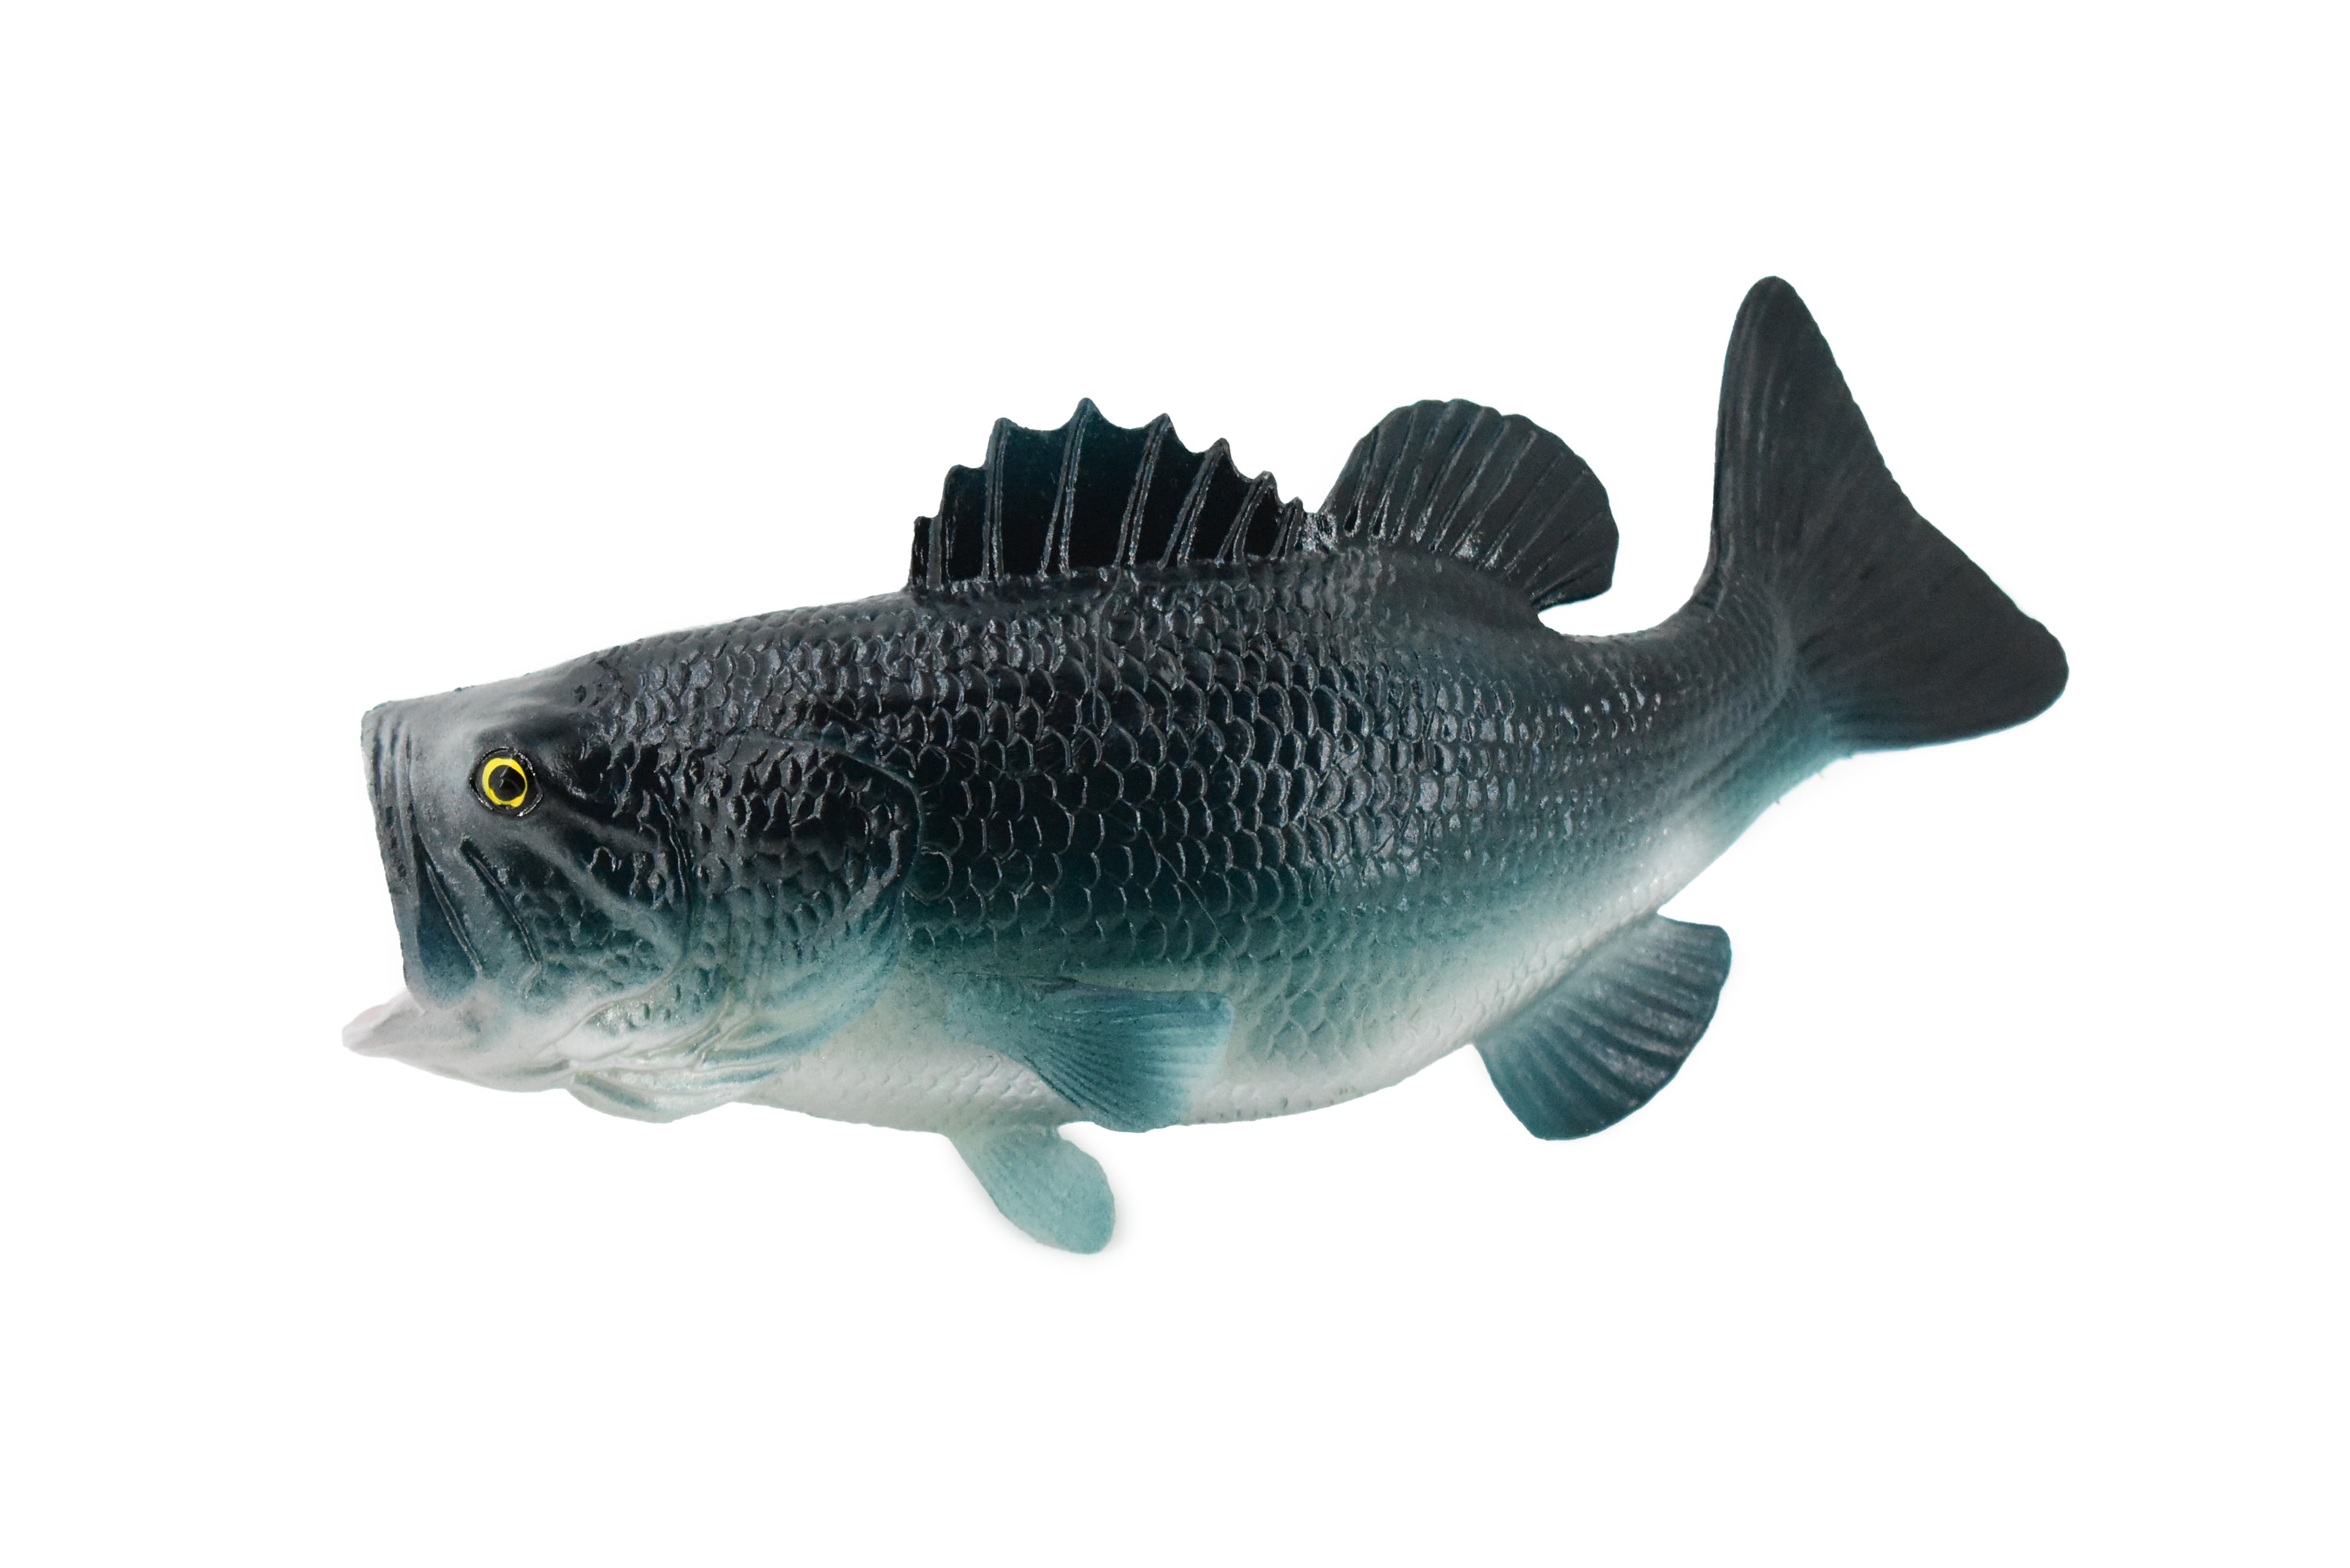 Largemouth Bass Fishing Fish - Magnet - Car Fridge Locker - Select Size :  : Home